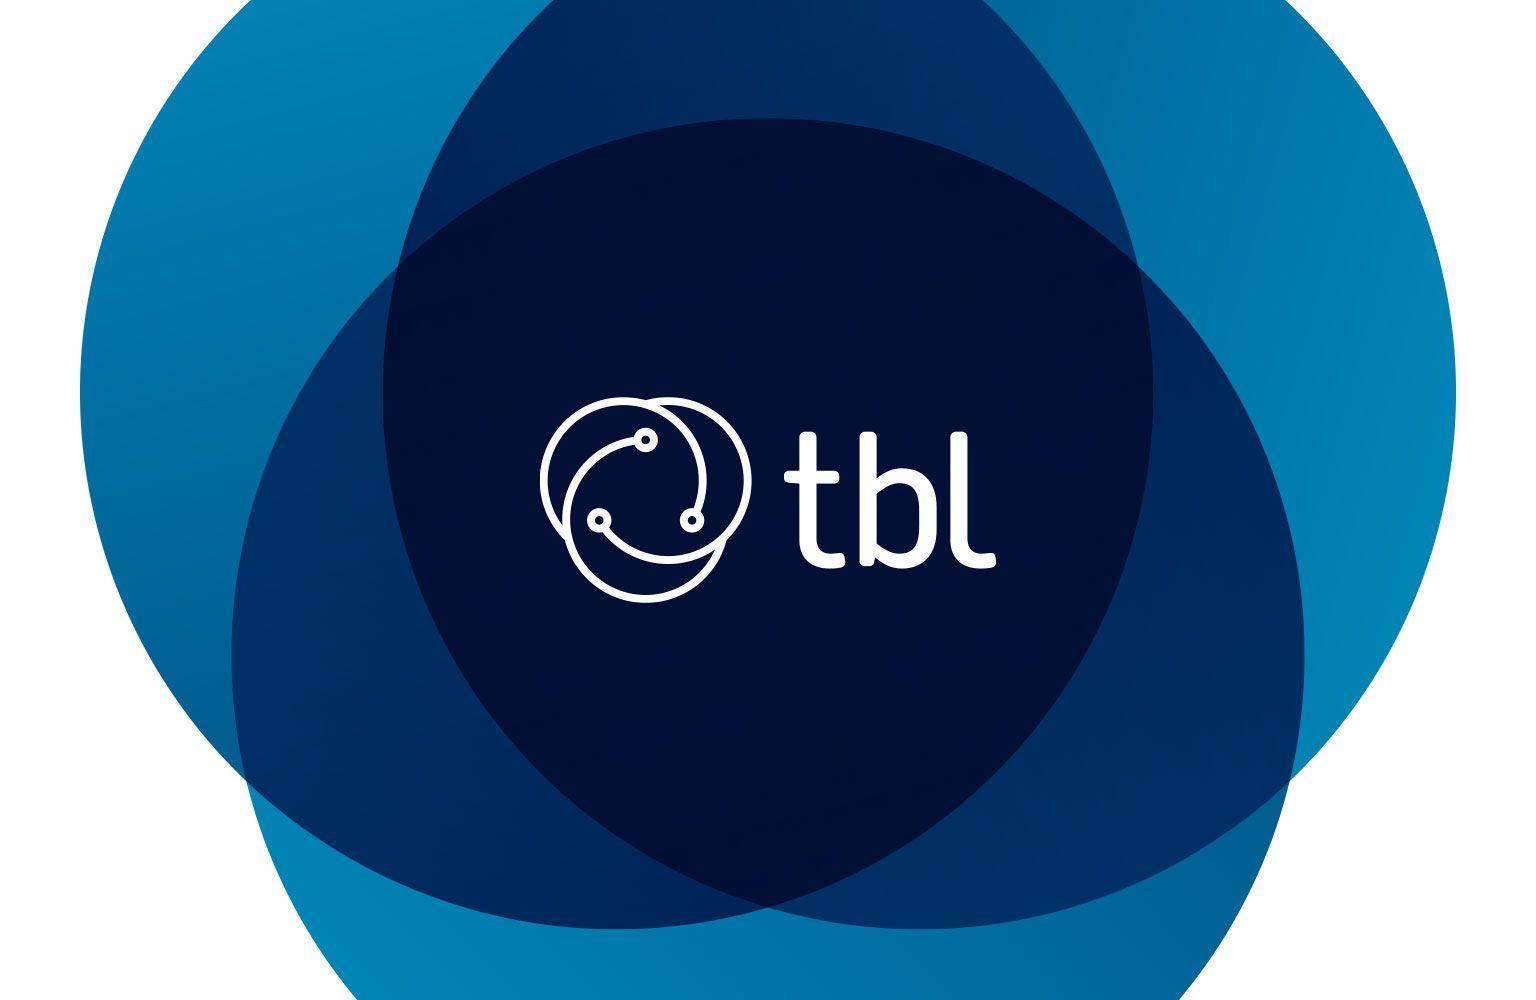 TBL Logo - Technology Blueprint Ltd Case Study - DeType Design